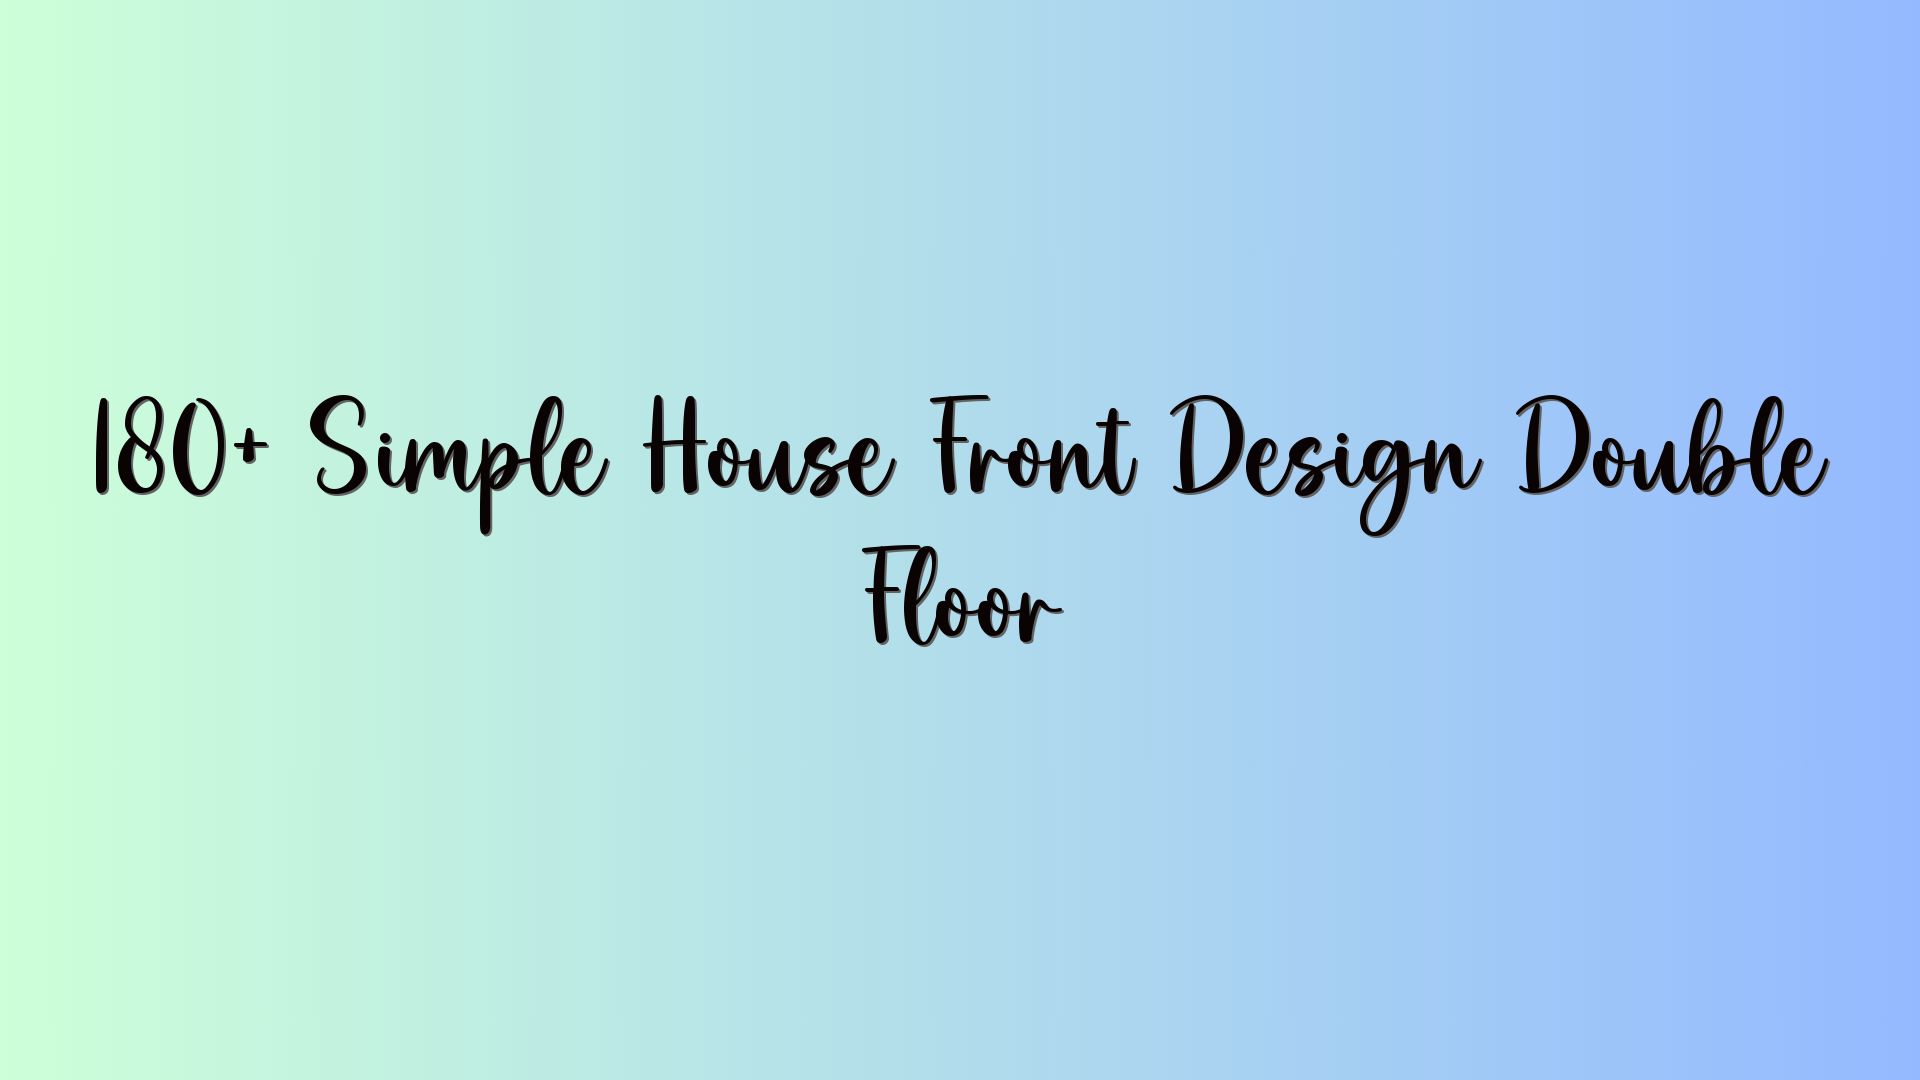 180+ Simple House Front Design Double Floor